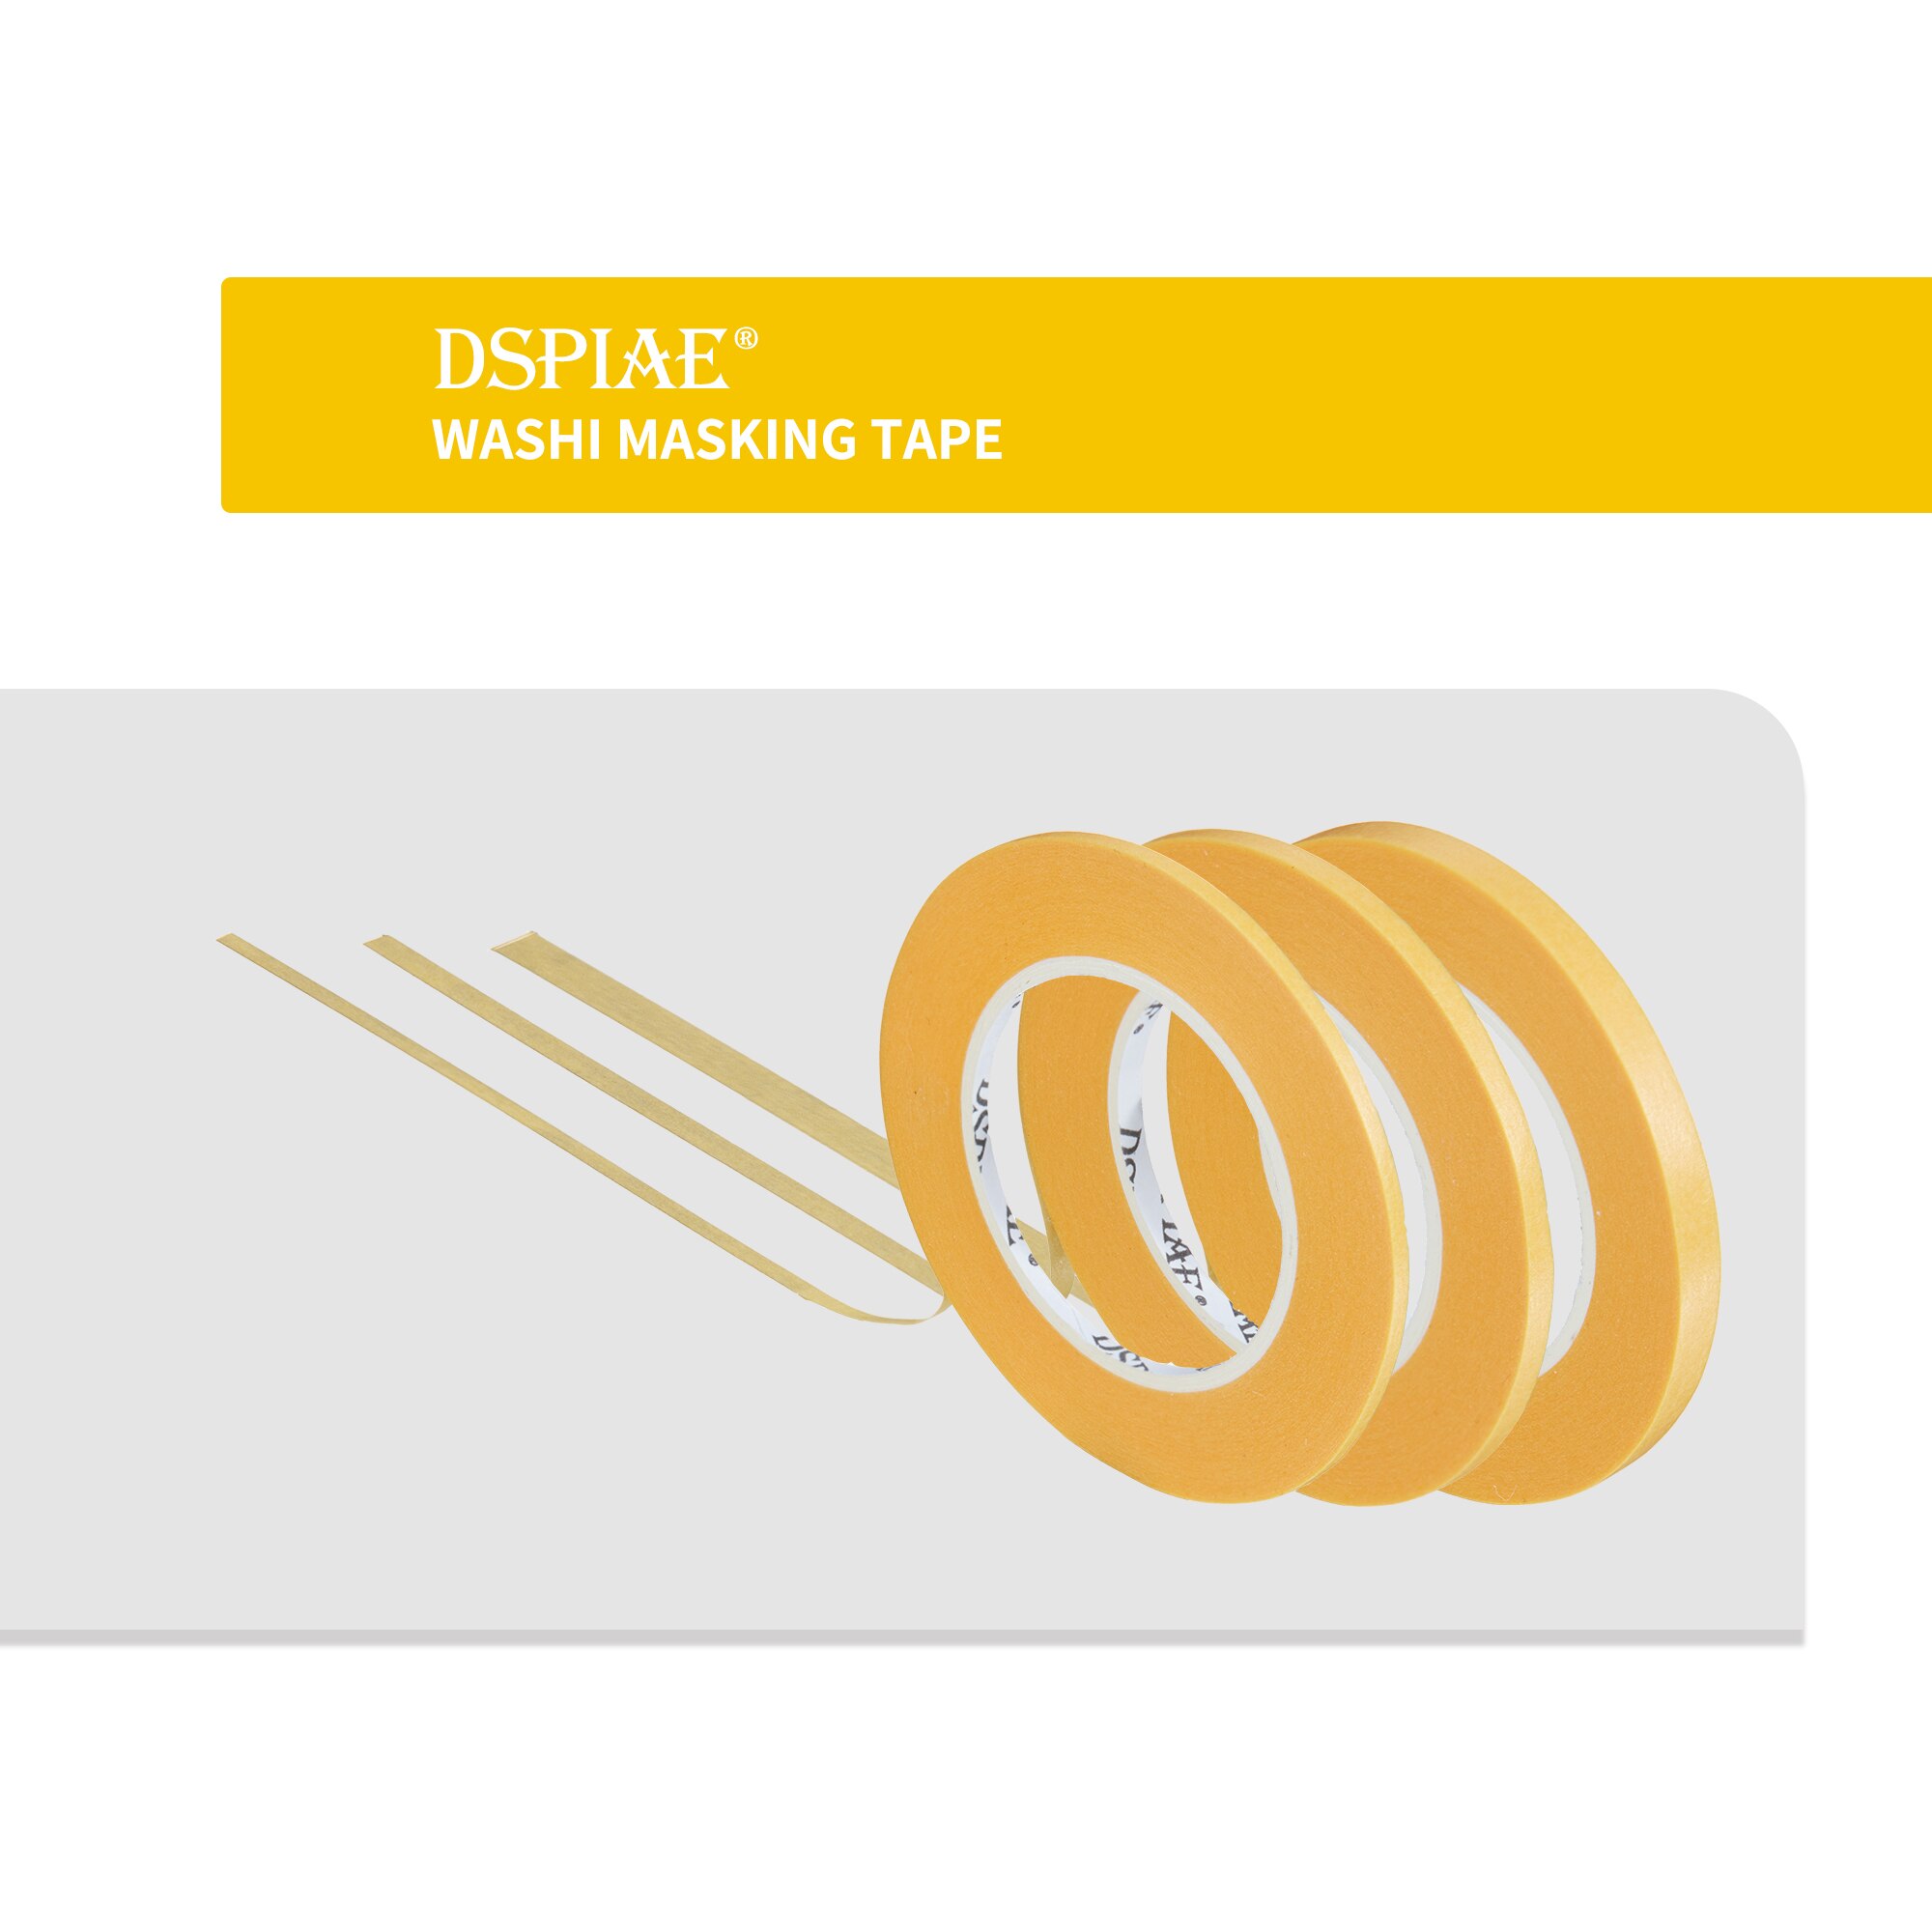 DSPIAE-modelo de cinta adhesiva